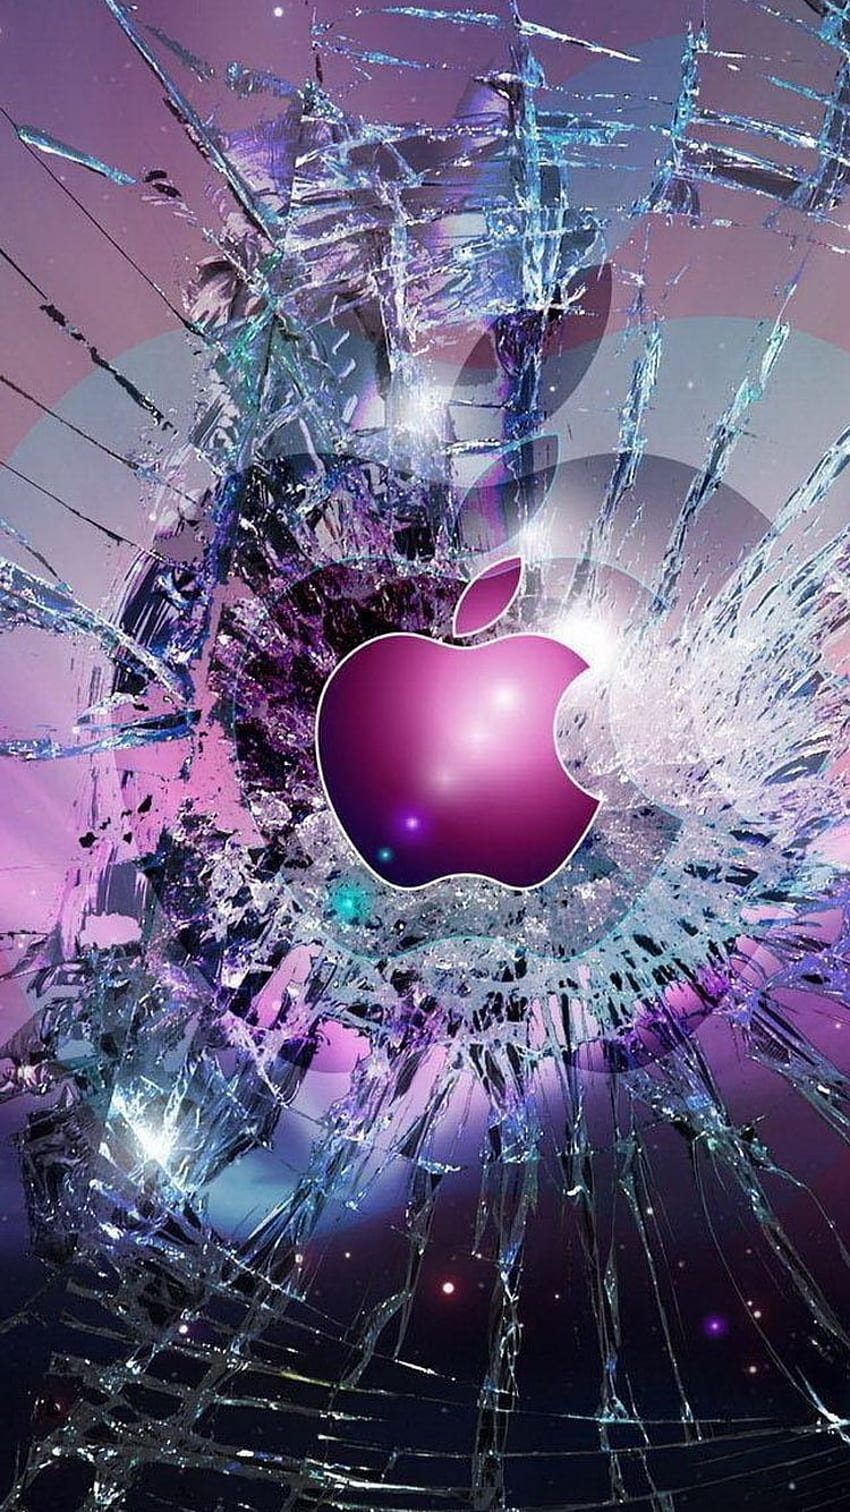 apple iphone home screen wallpaper